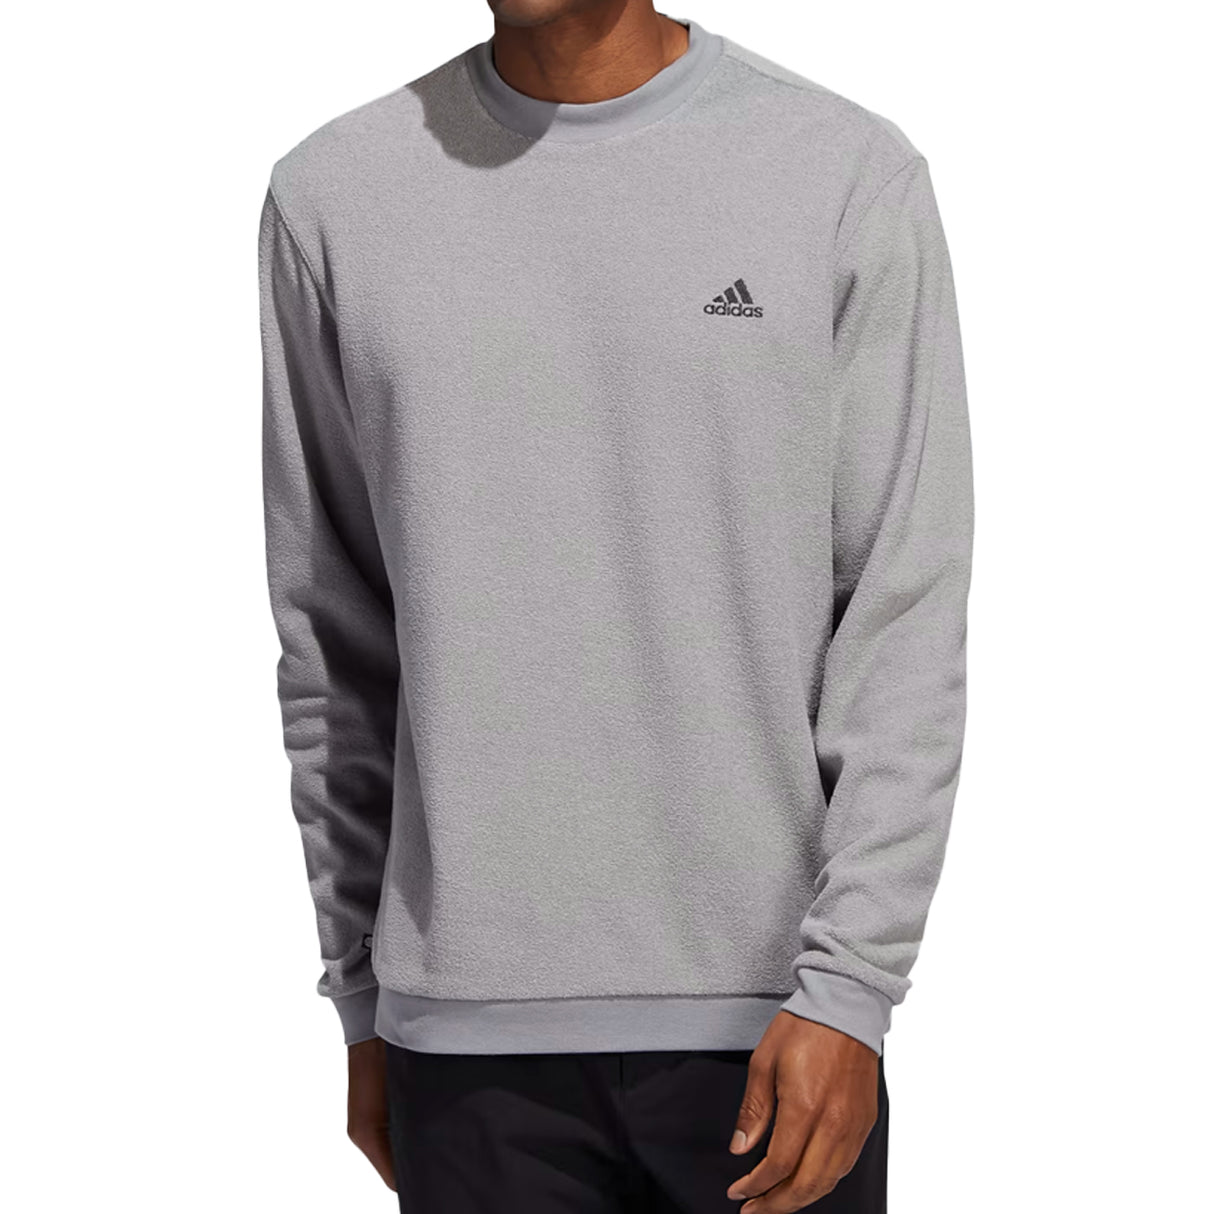 Adidas Golf Men's Core Crew Performance Pullover Sweatshirt